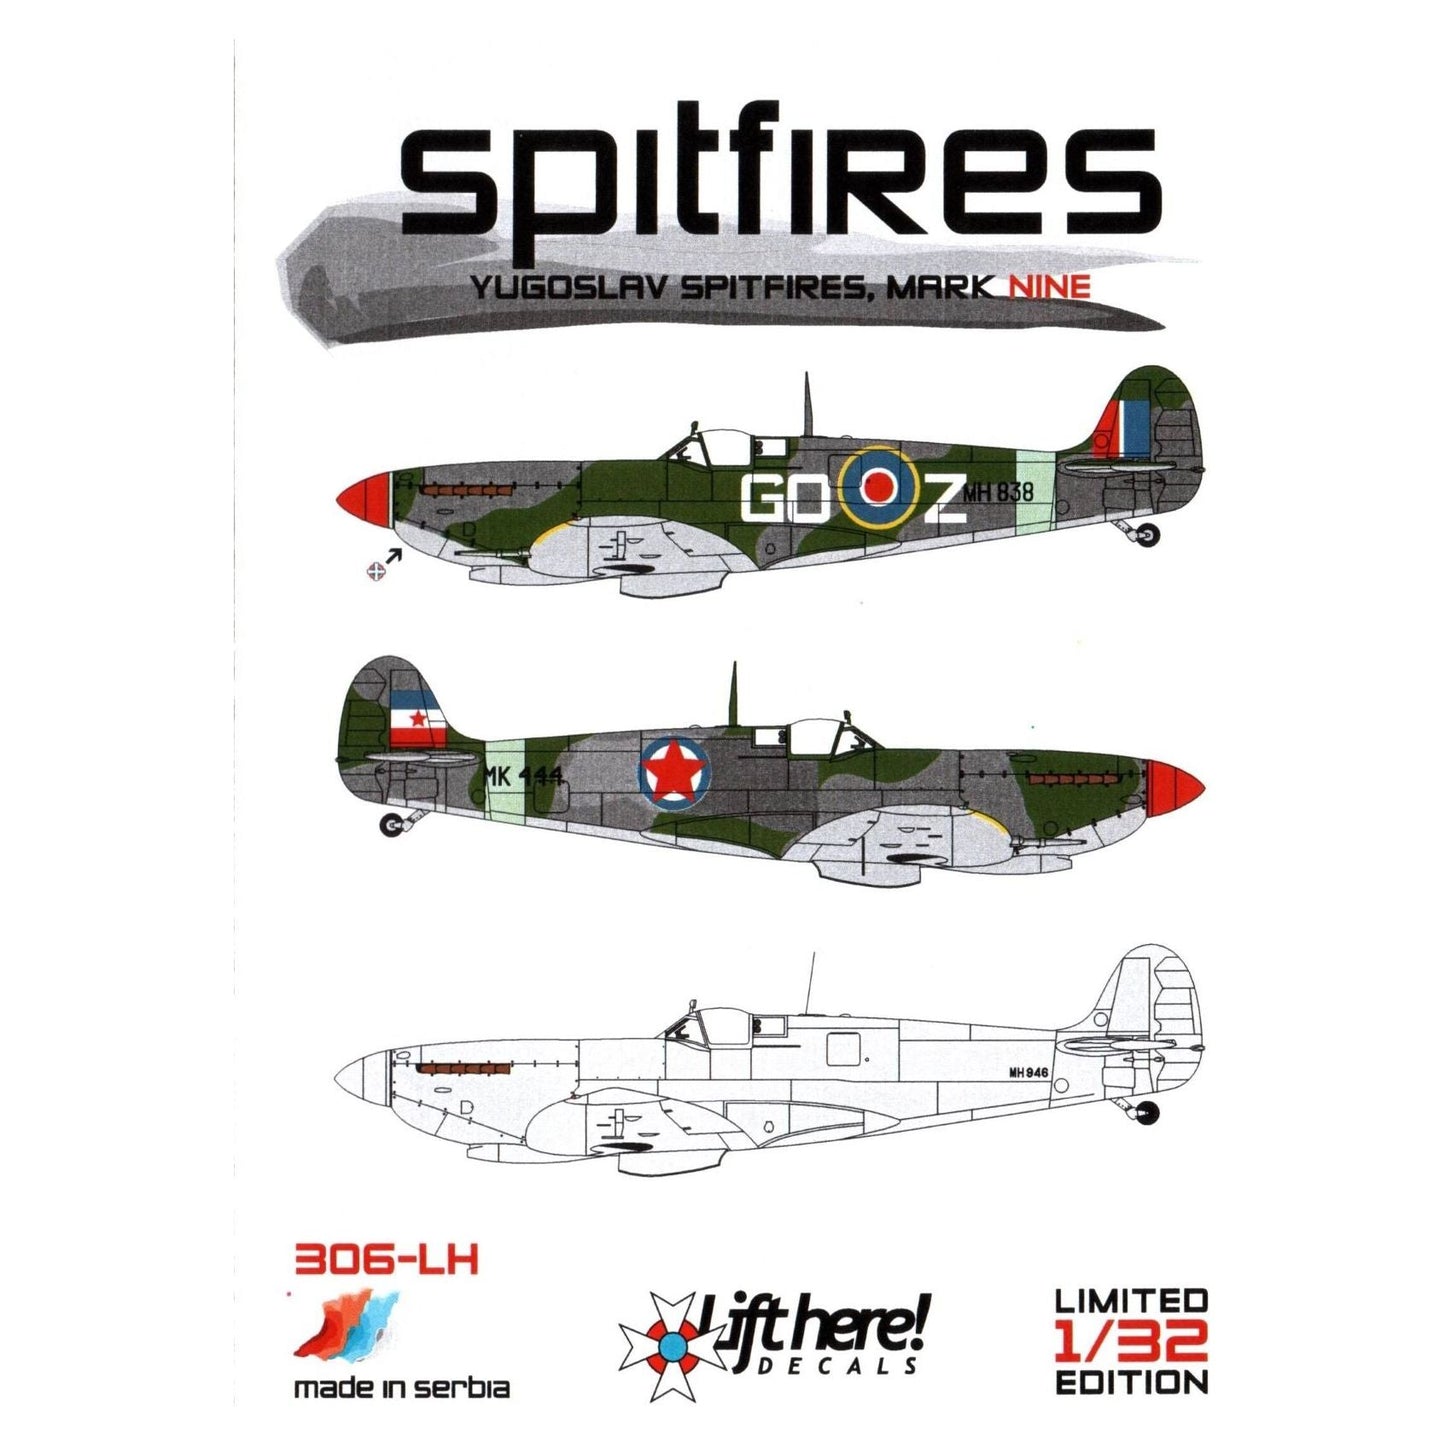 Lift Here [ 306-LH] Spitfire: Yugoslav Spitfires Mk.IX, 1/32